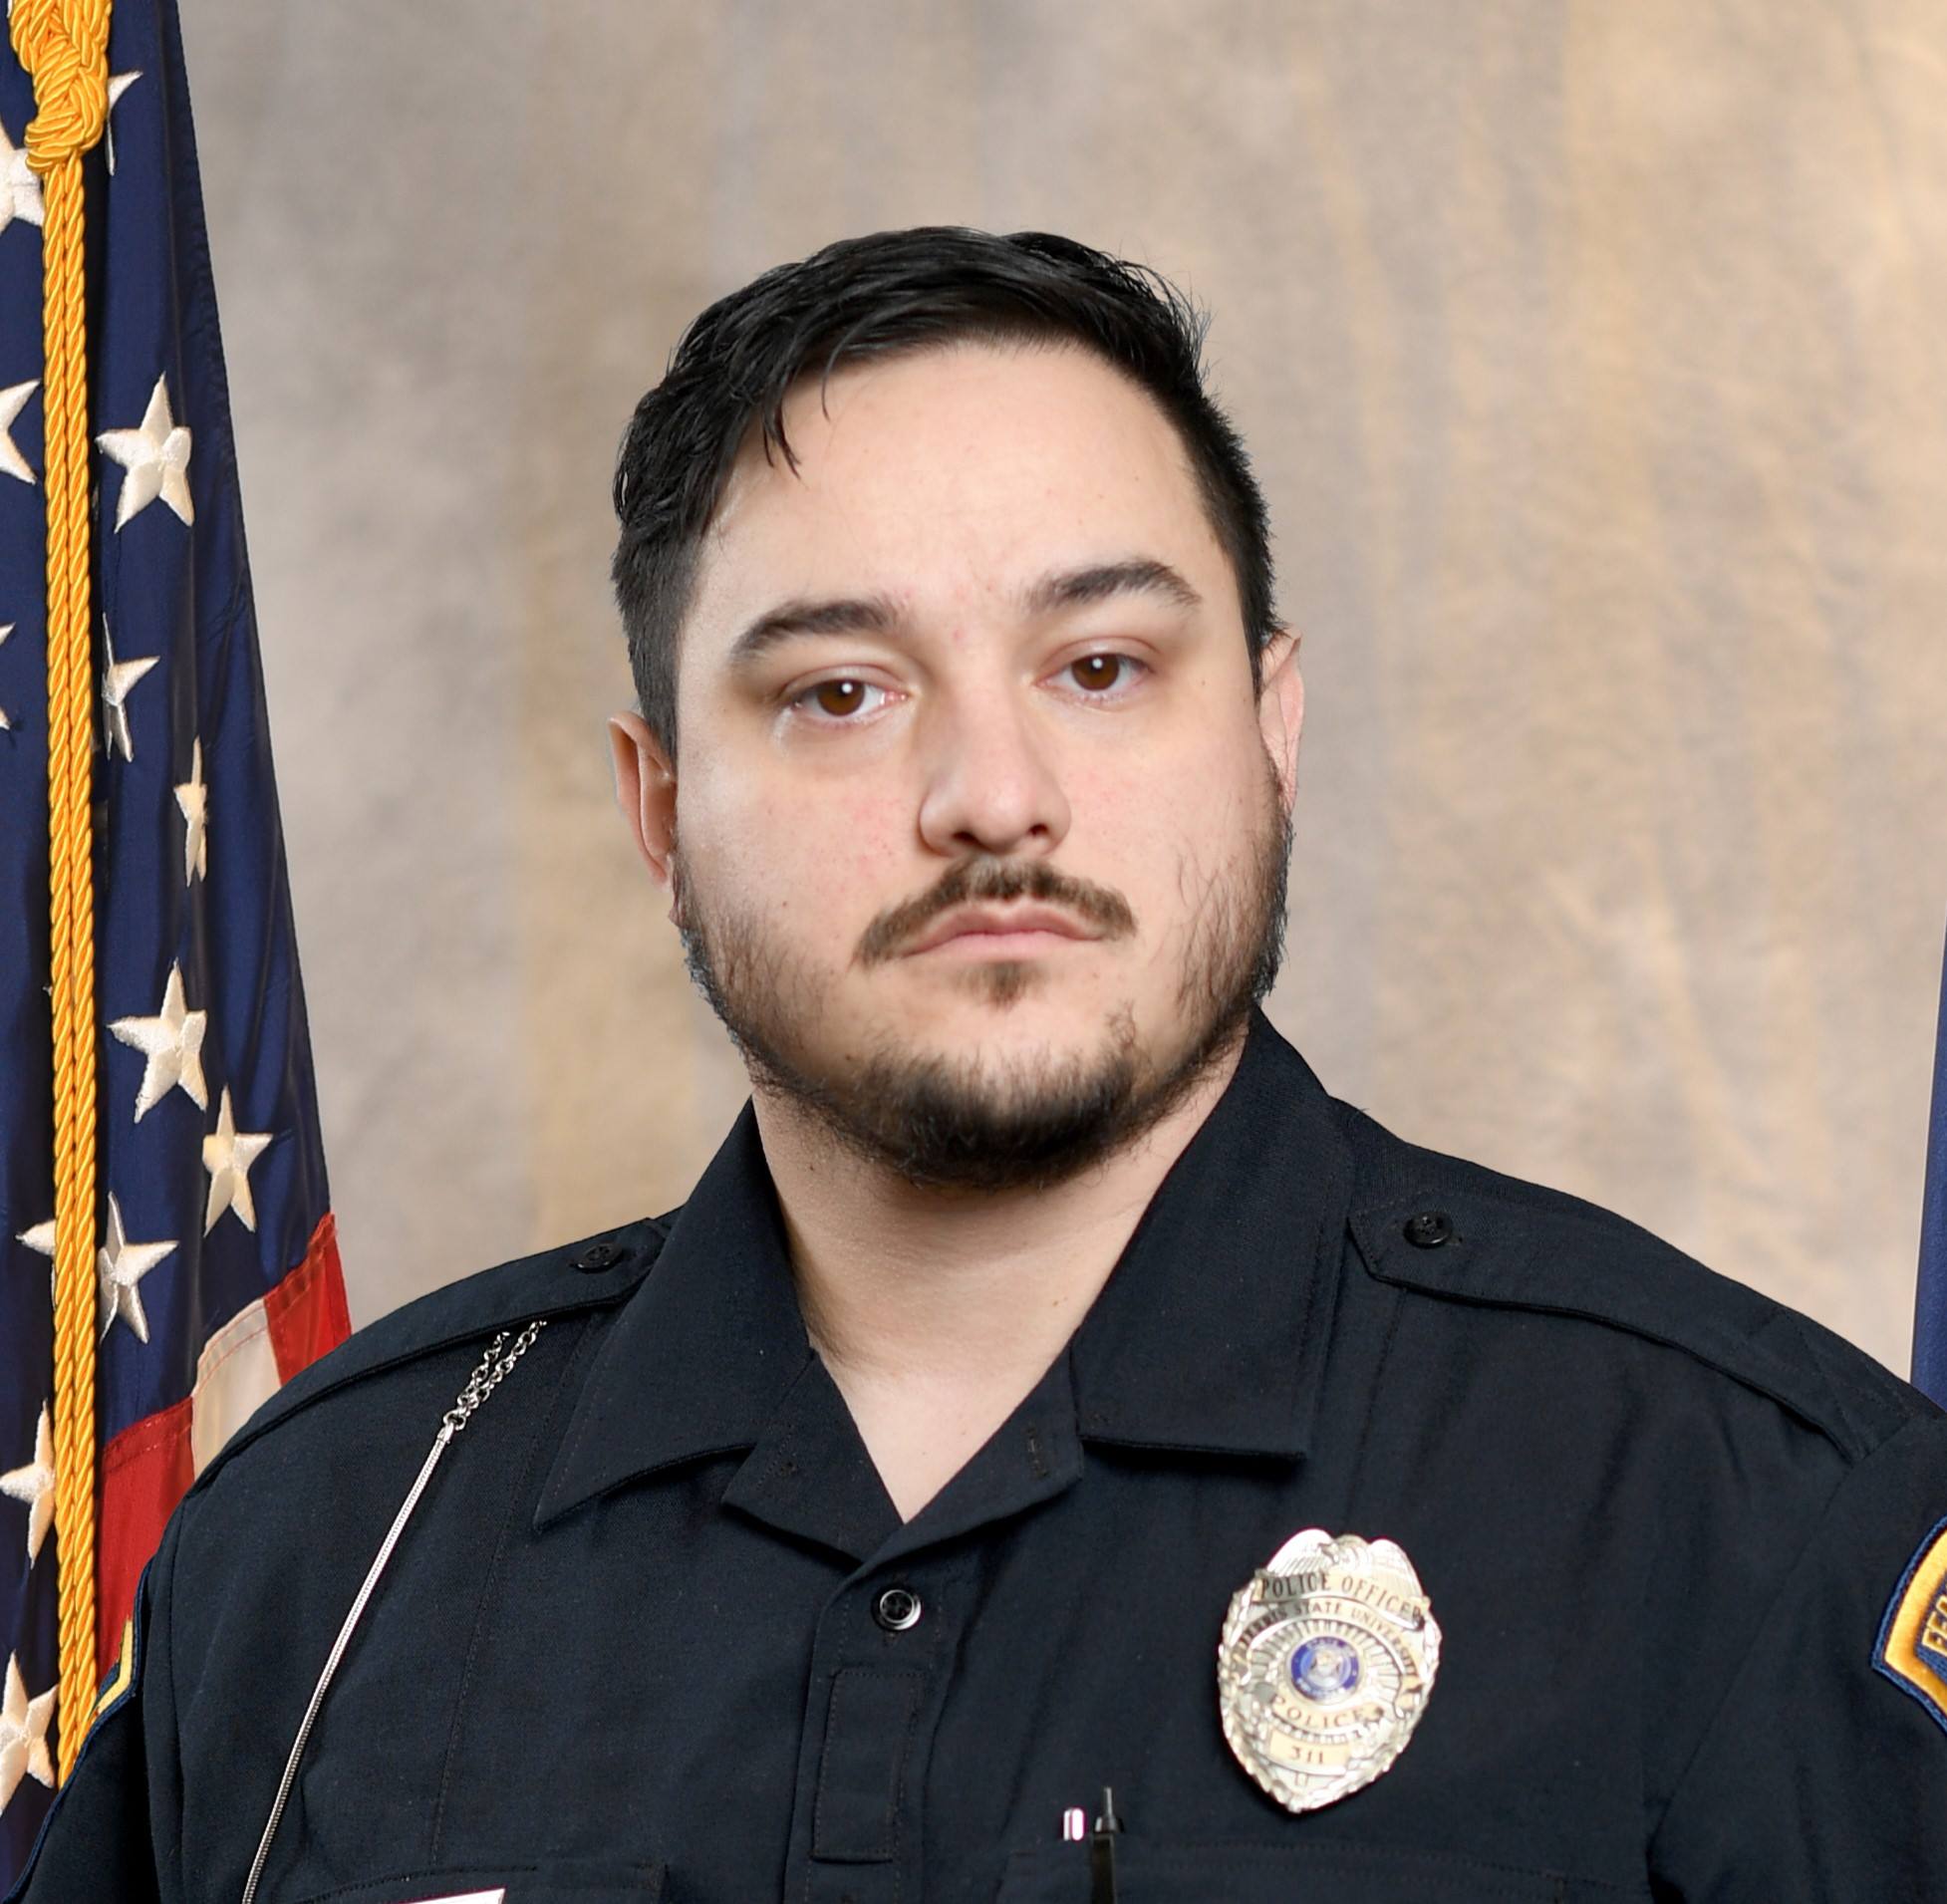 Officer Richard Herrera